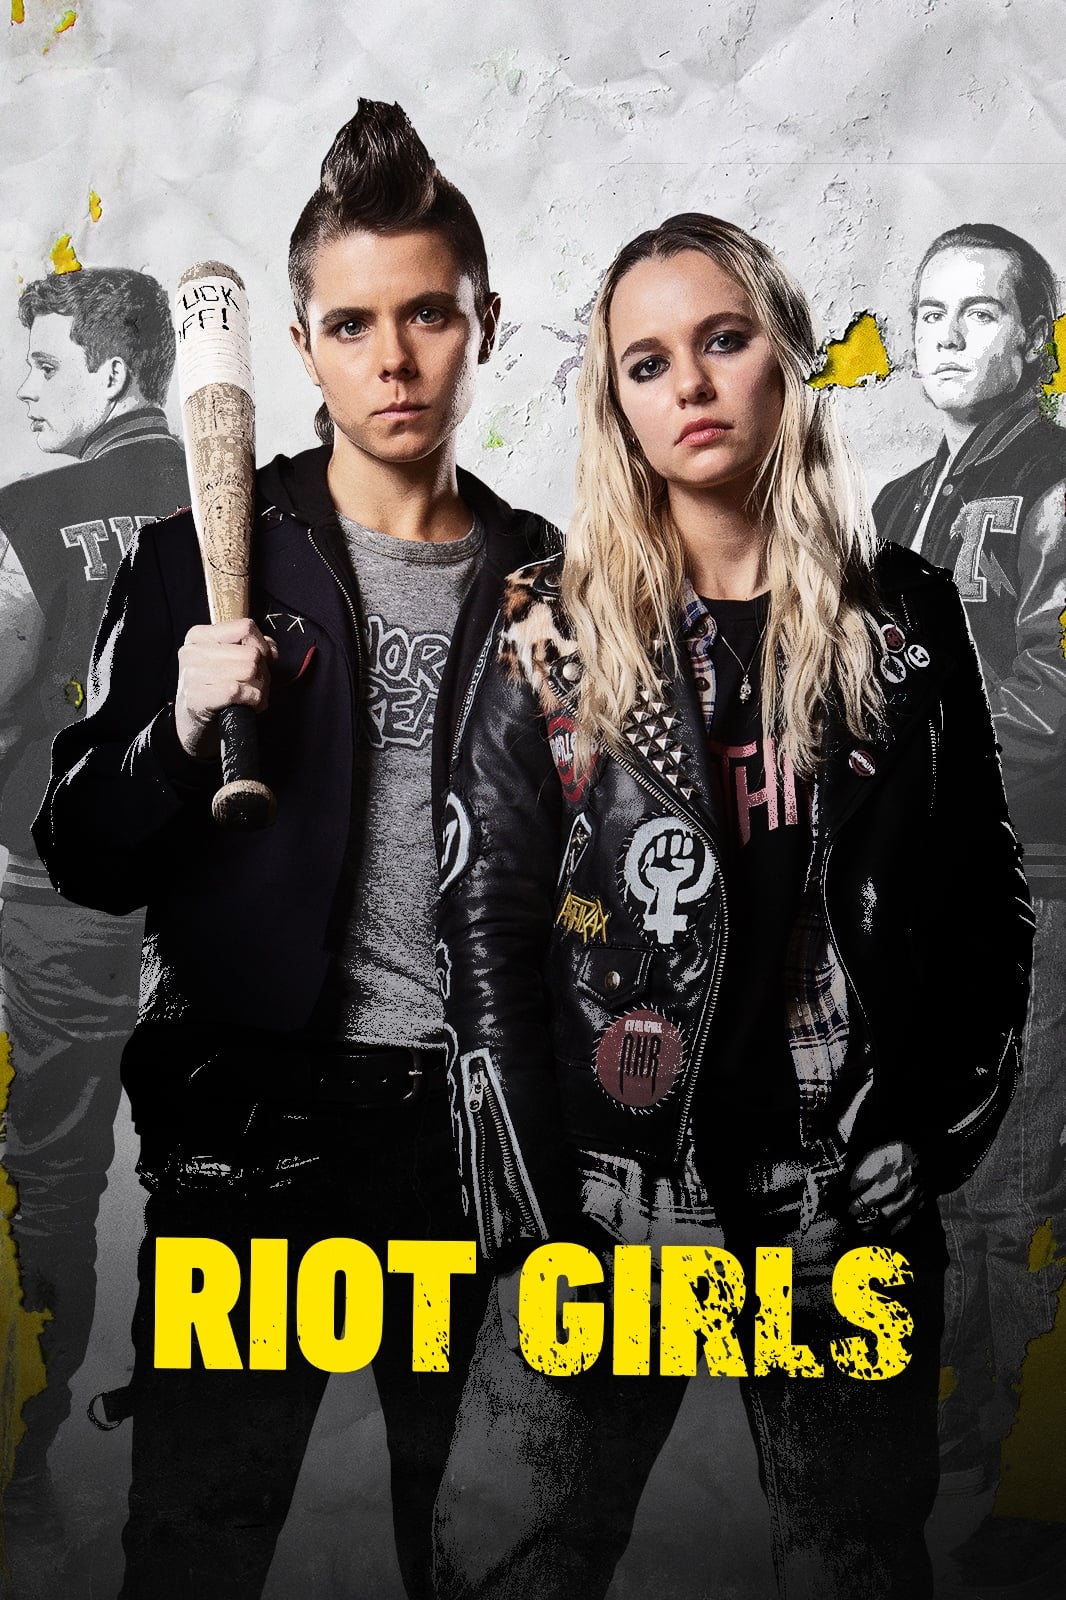 Riot Girls poster